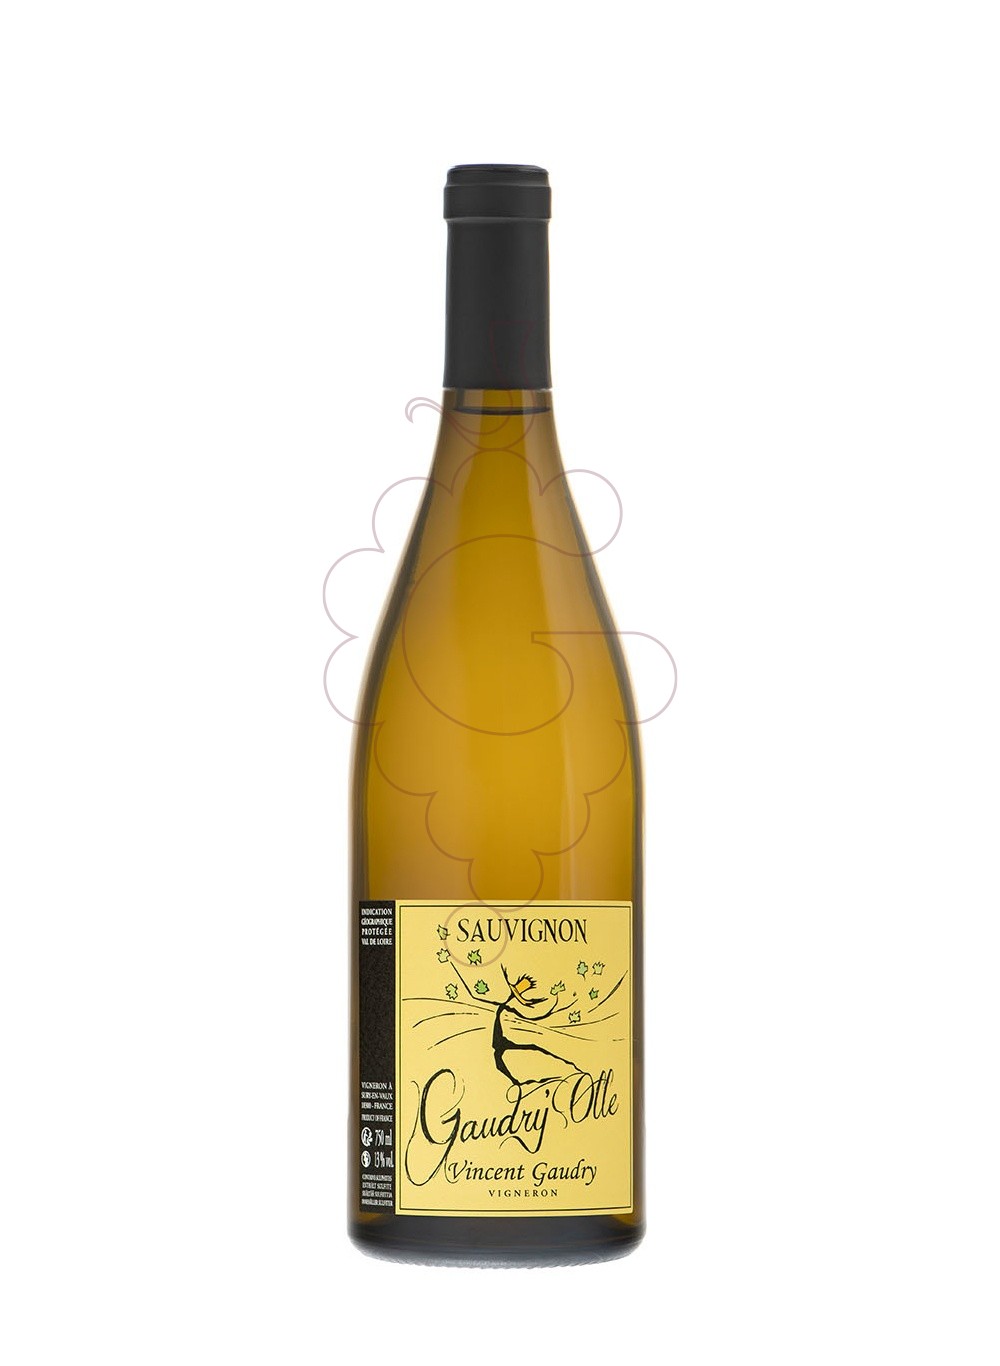 Photo Gaudry olle sauvignon blanc 22 white wine